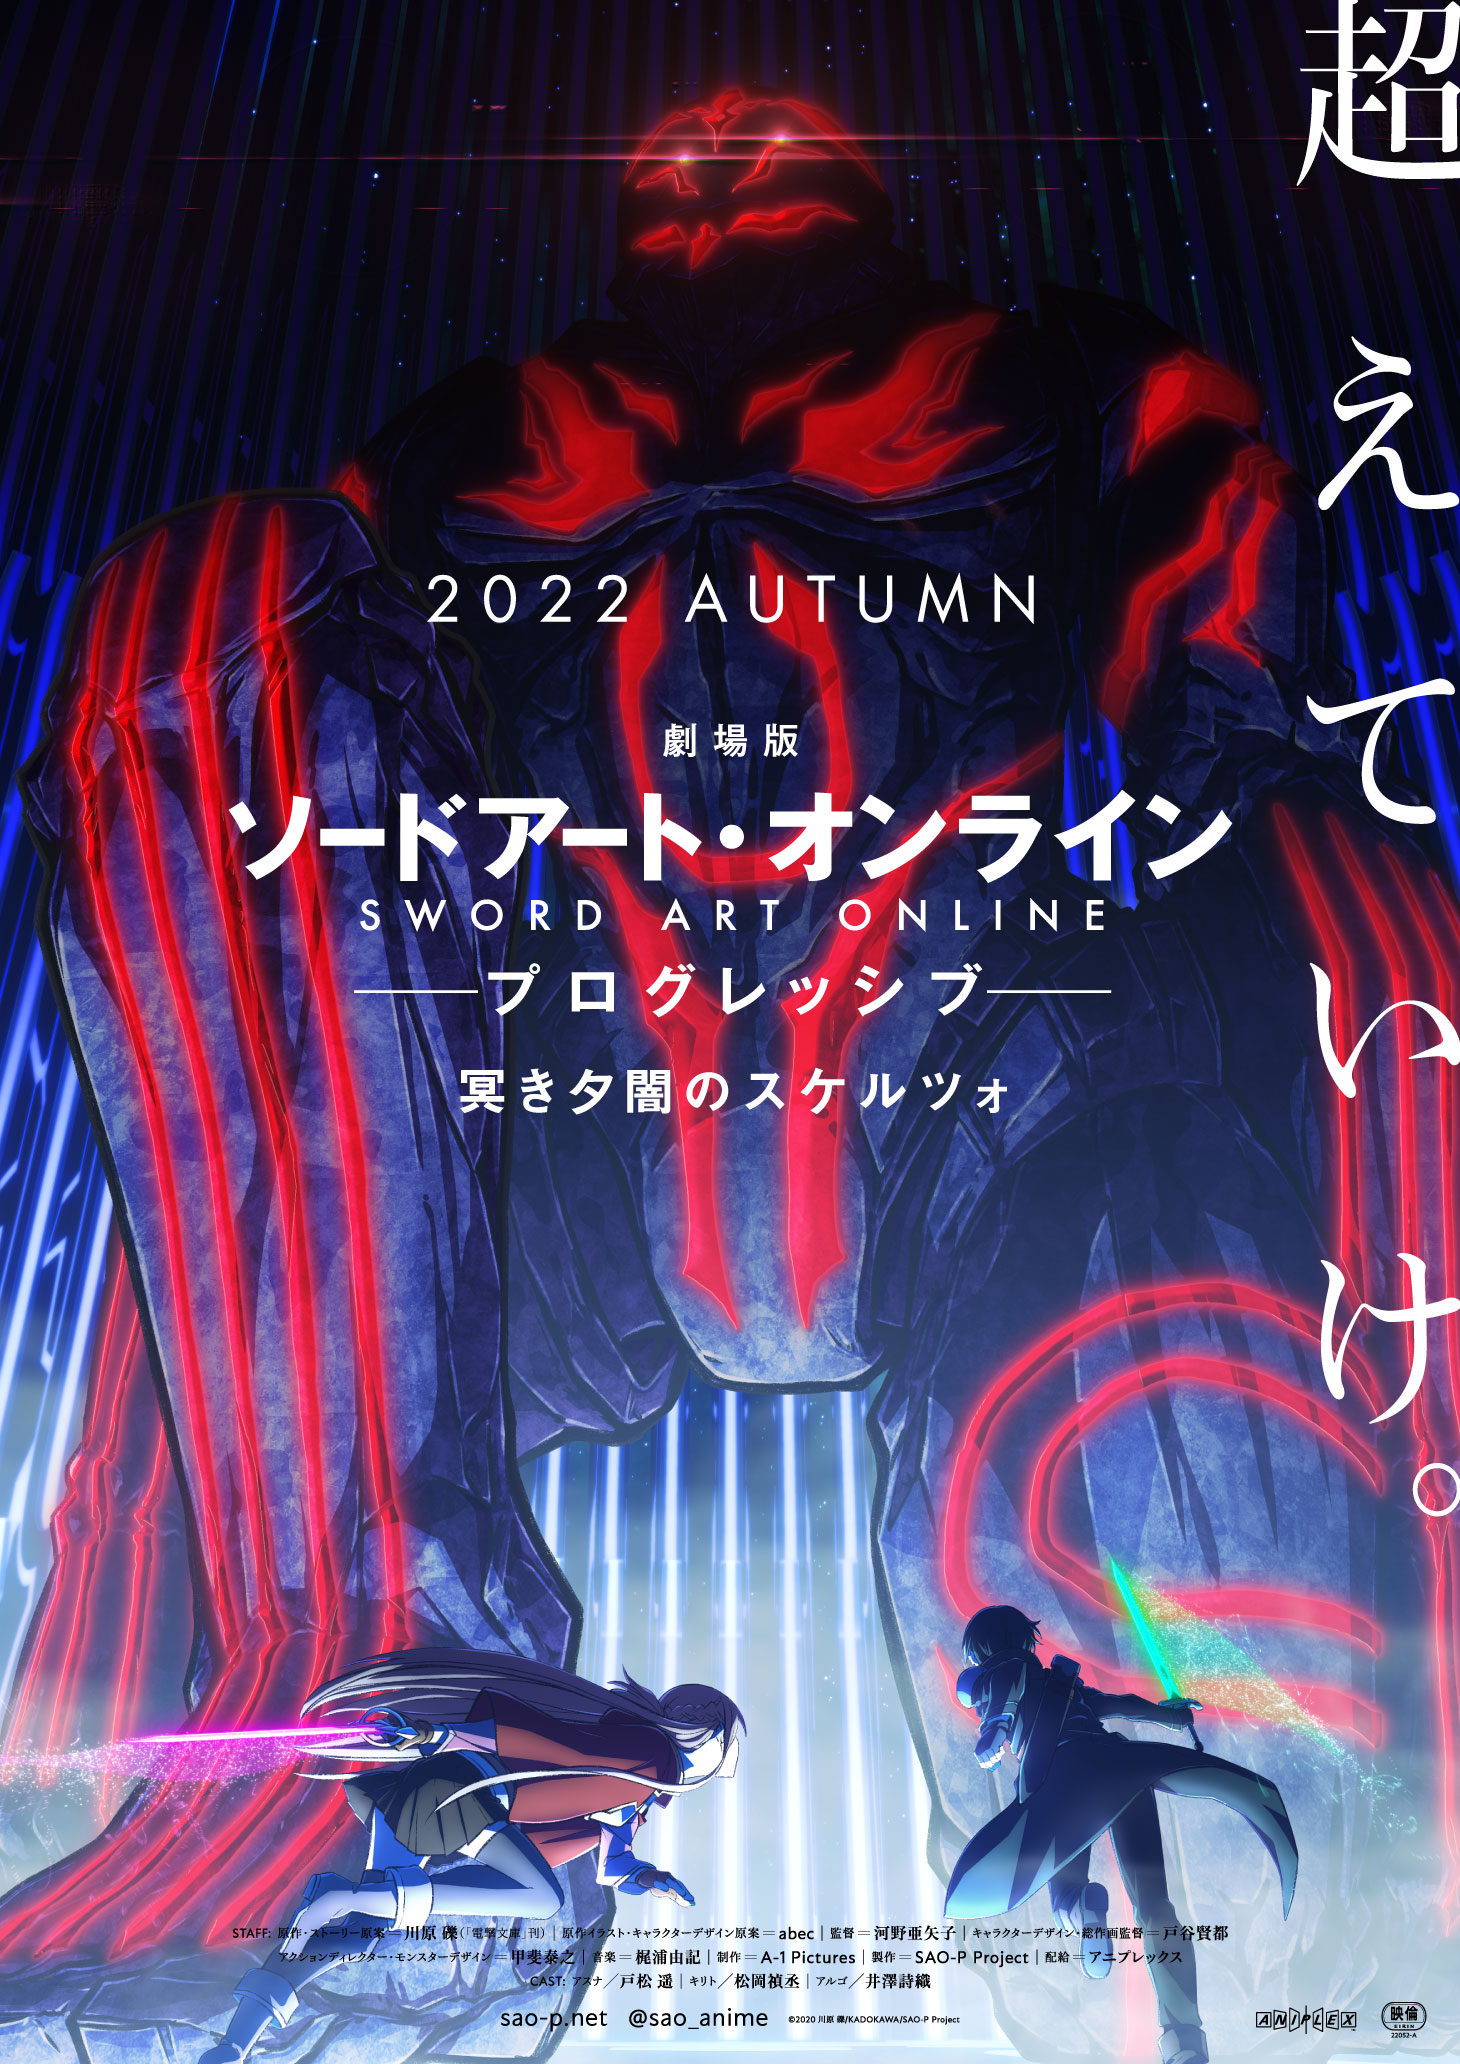 Sword Art Online: Progressive Movie Reveals New Short Trailer - Anime Corner